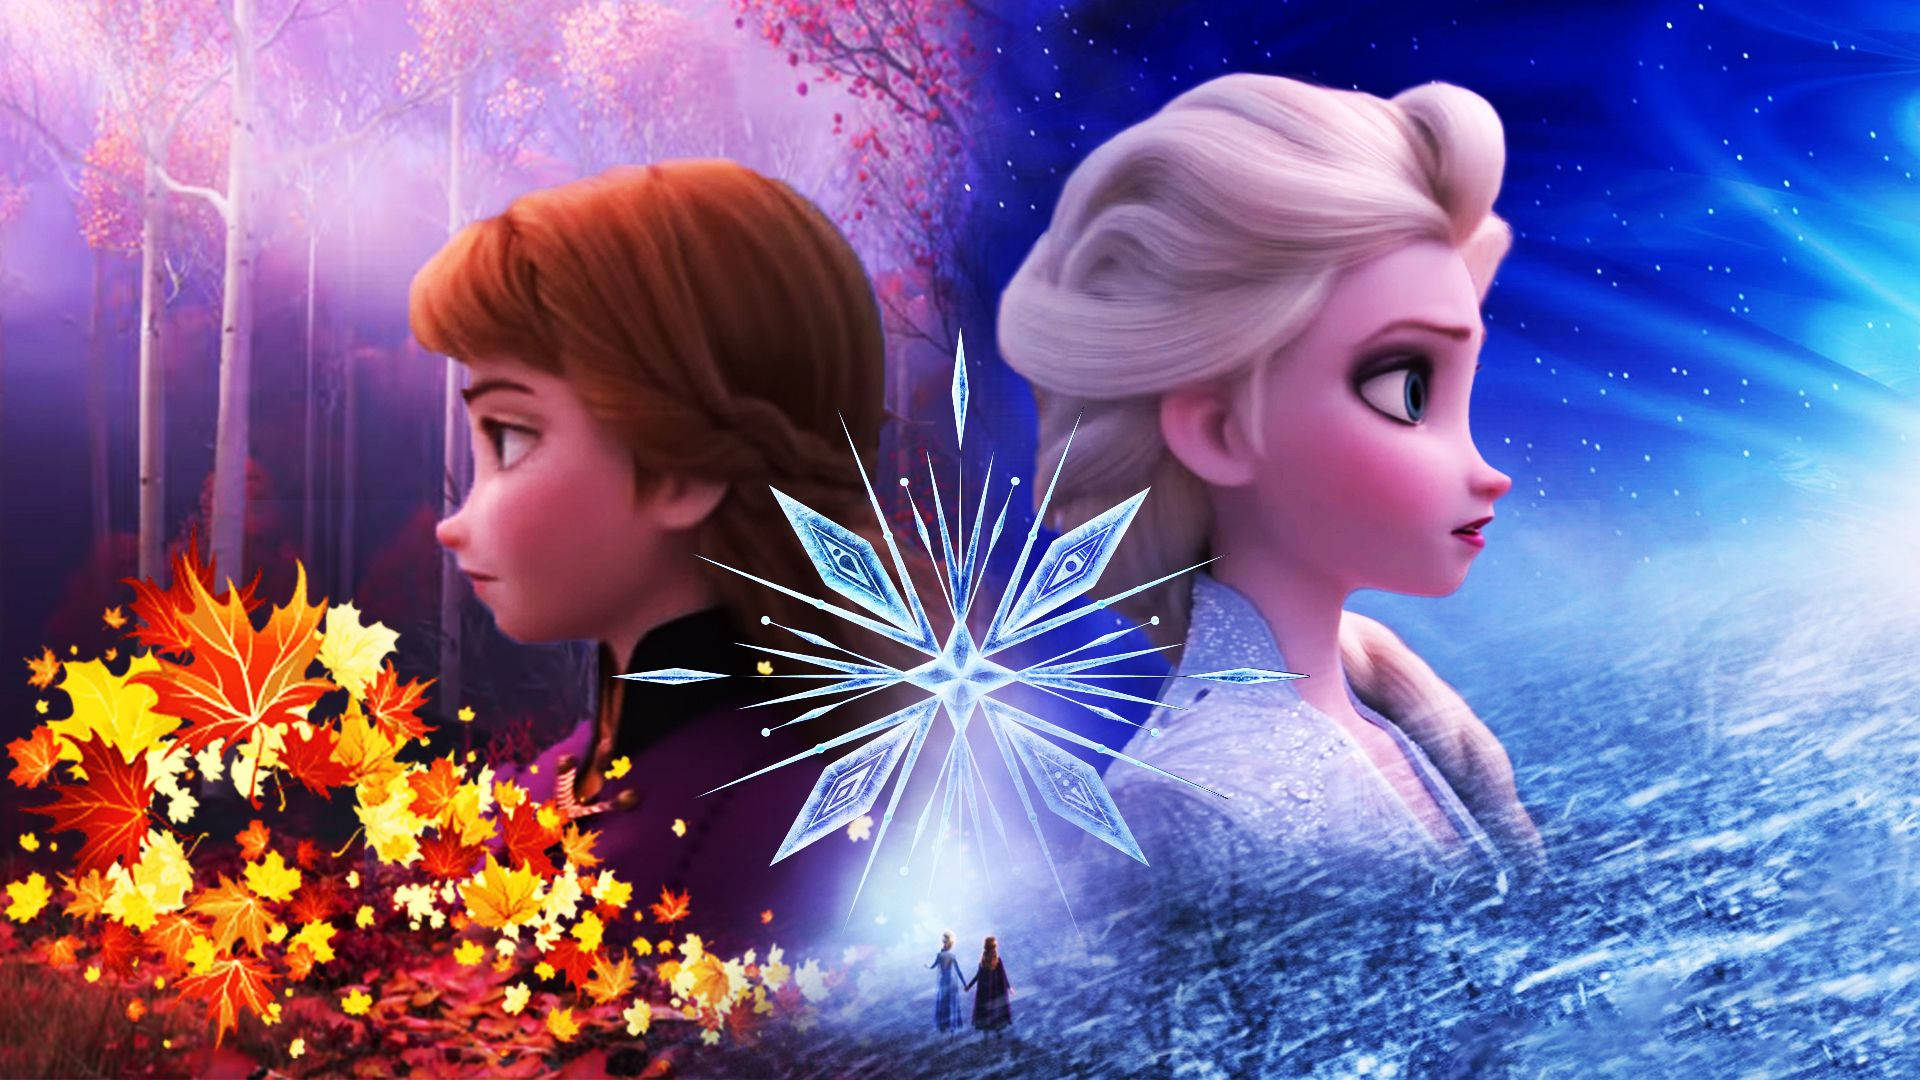 Elsa And Anna Frozen 2 Qrw5dyrl6roxn5pr 